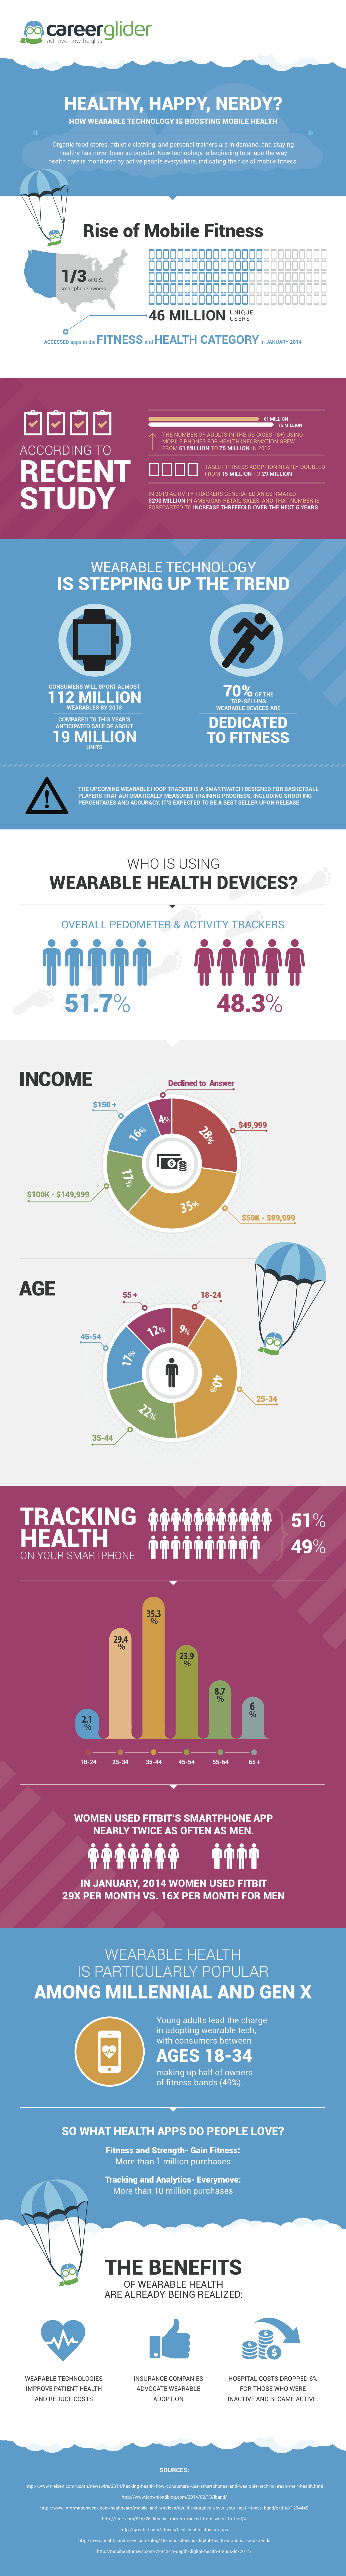 Career Glider Digital Health Infographic